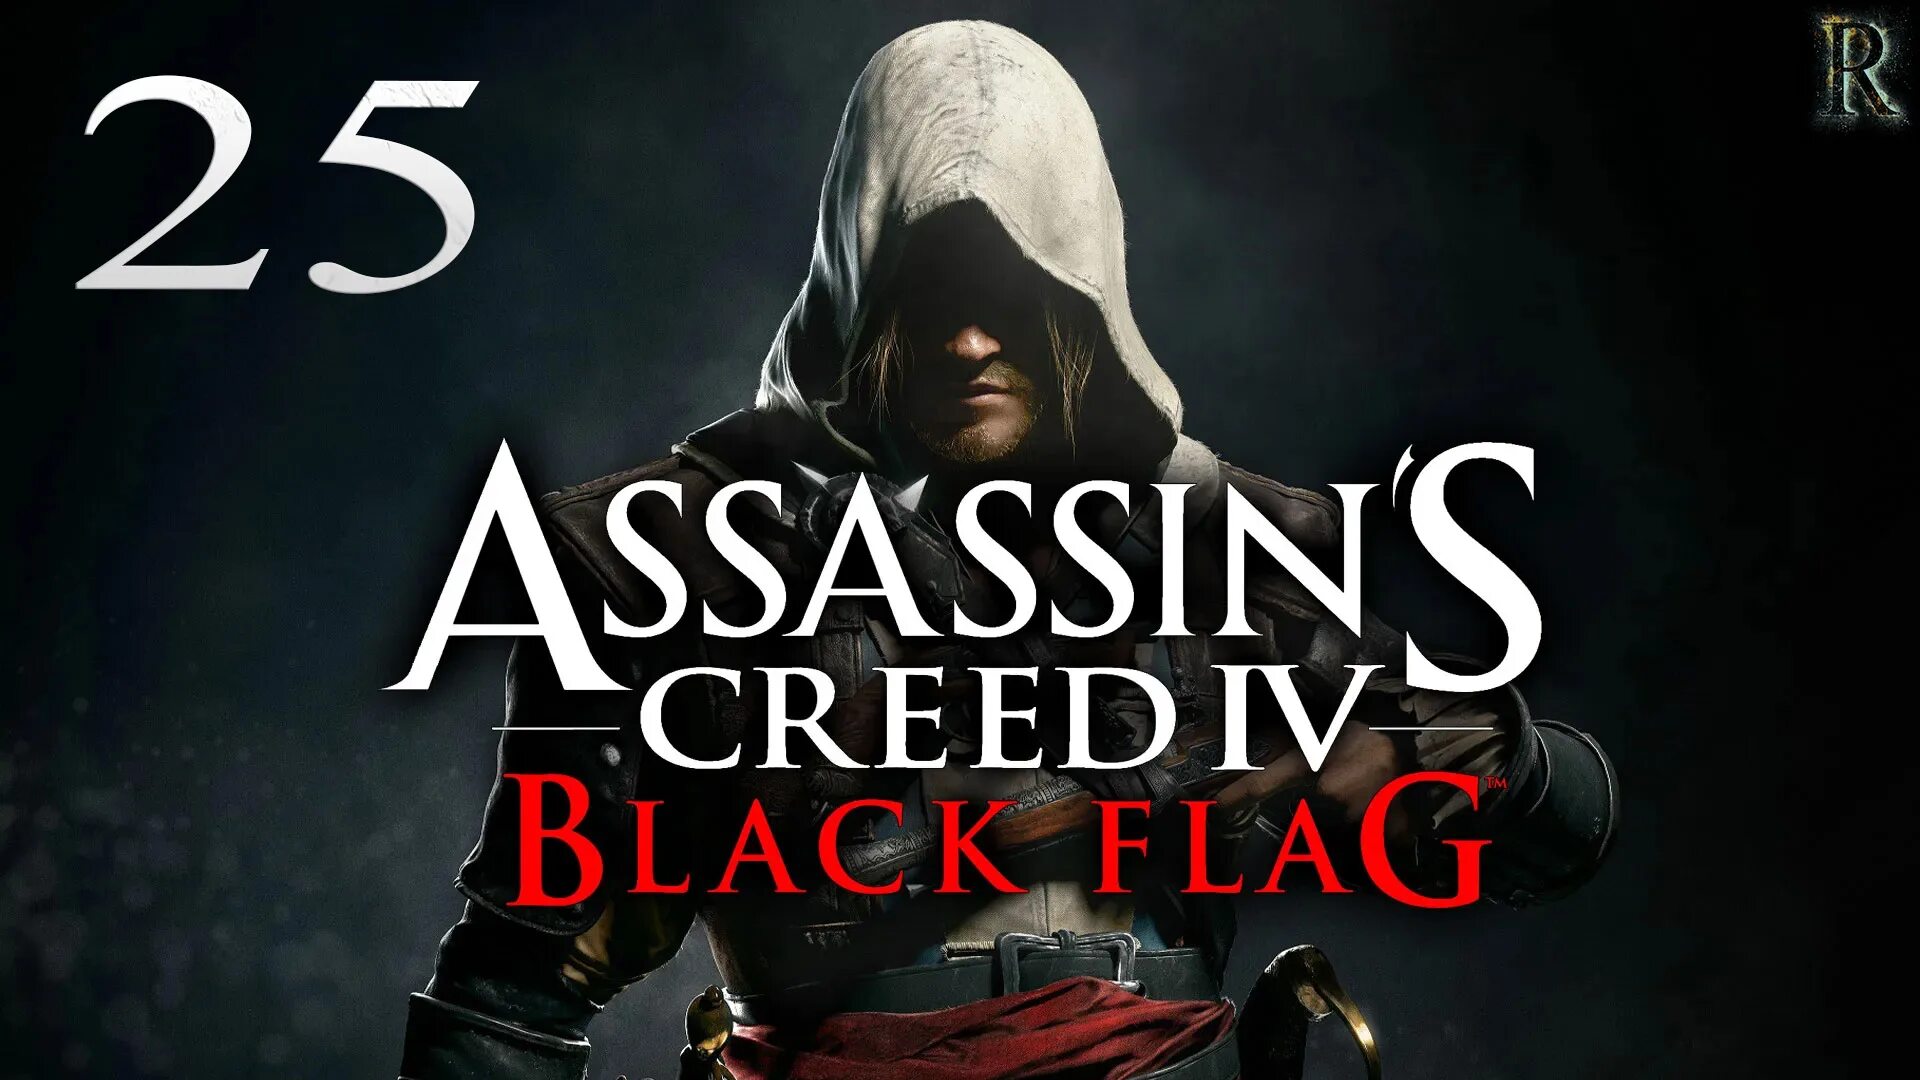 Assasın creed 4. Ассасин Крид черный флаг на пс4. Assassin's Creed 4 Black Flag обложка. АС 4 Блэк флаг. Assassin's Creed 4 Black Flag Постер.